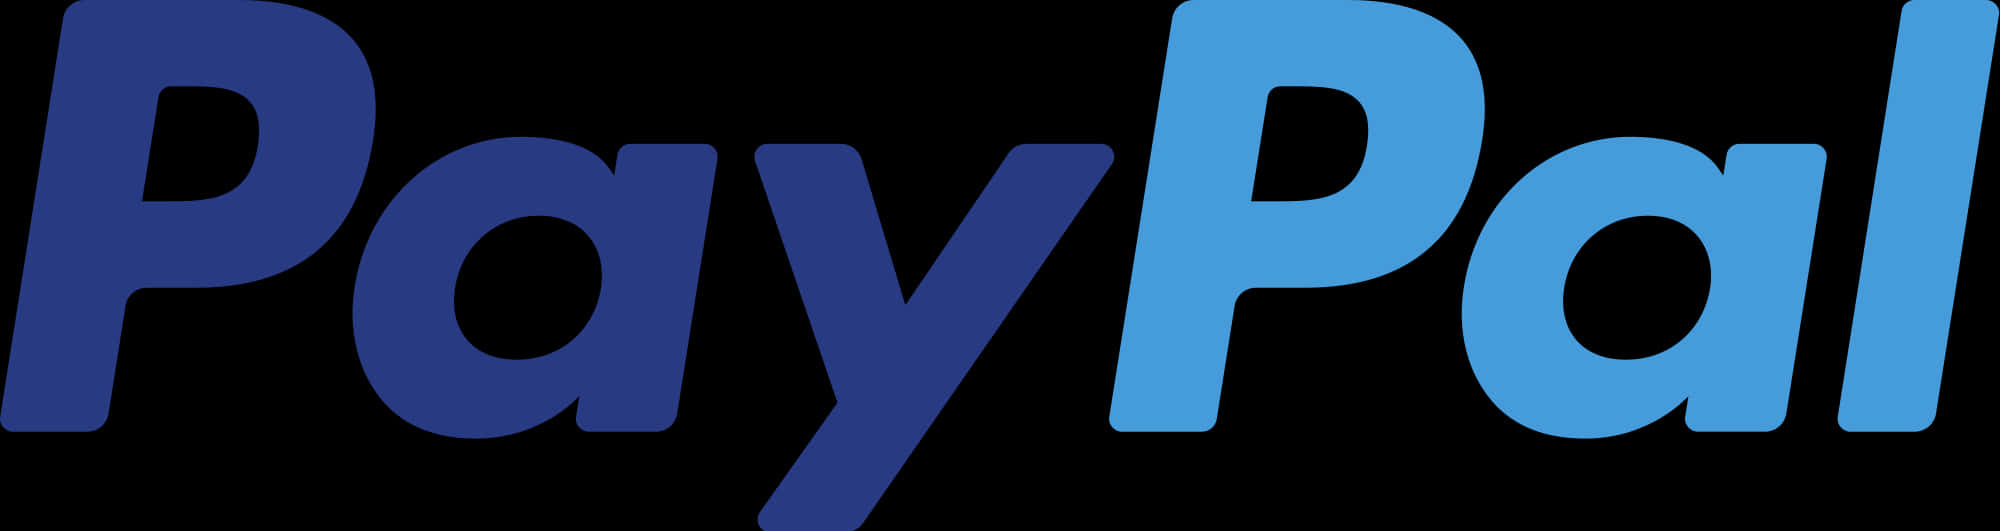 Pay Pal Logo Blue Background PNG image